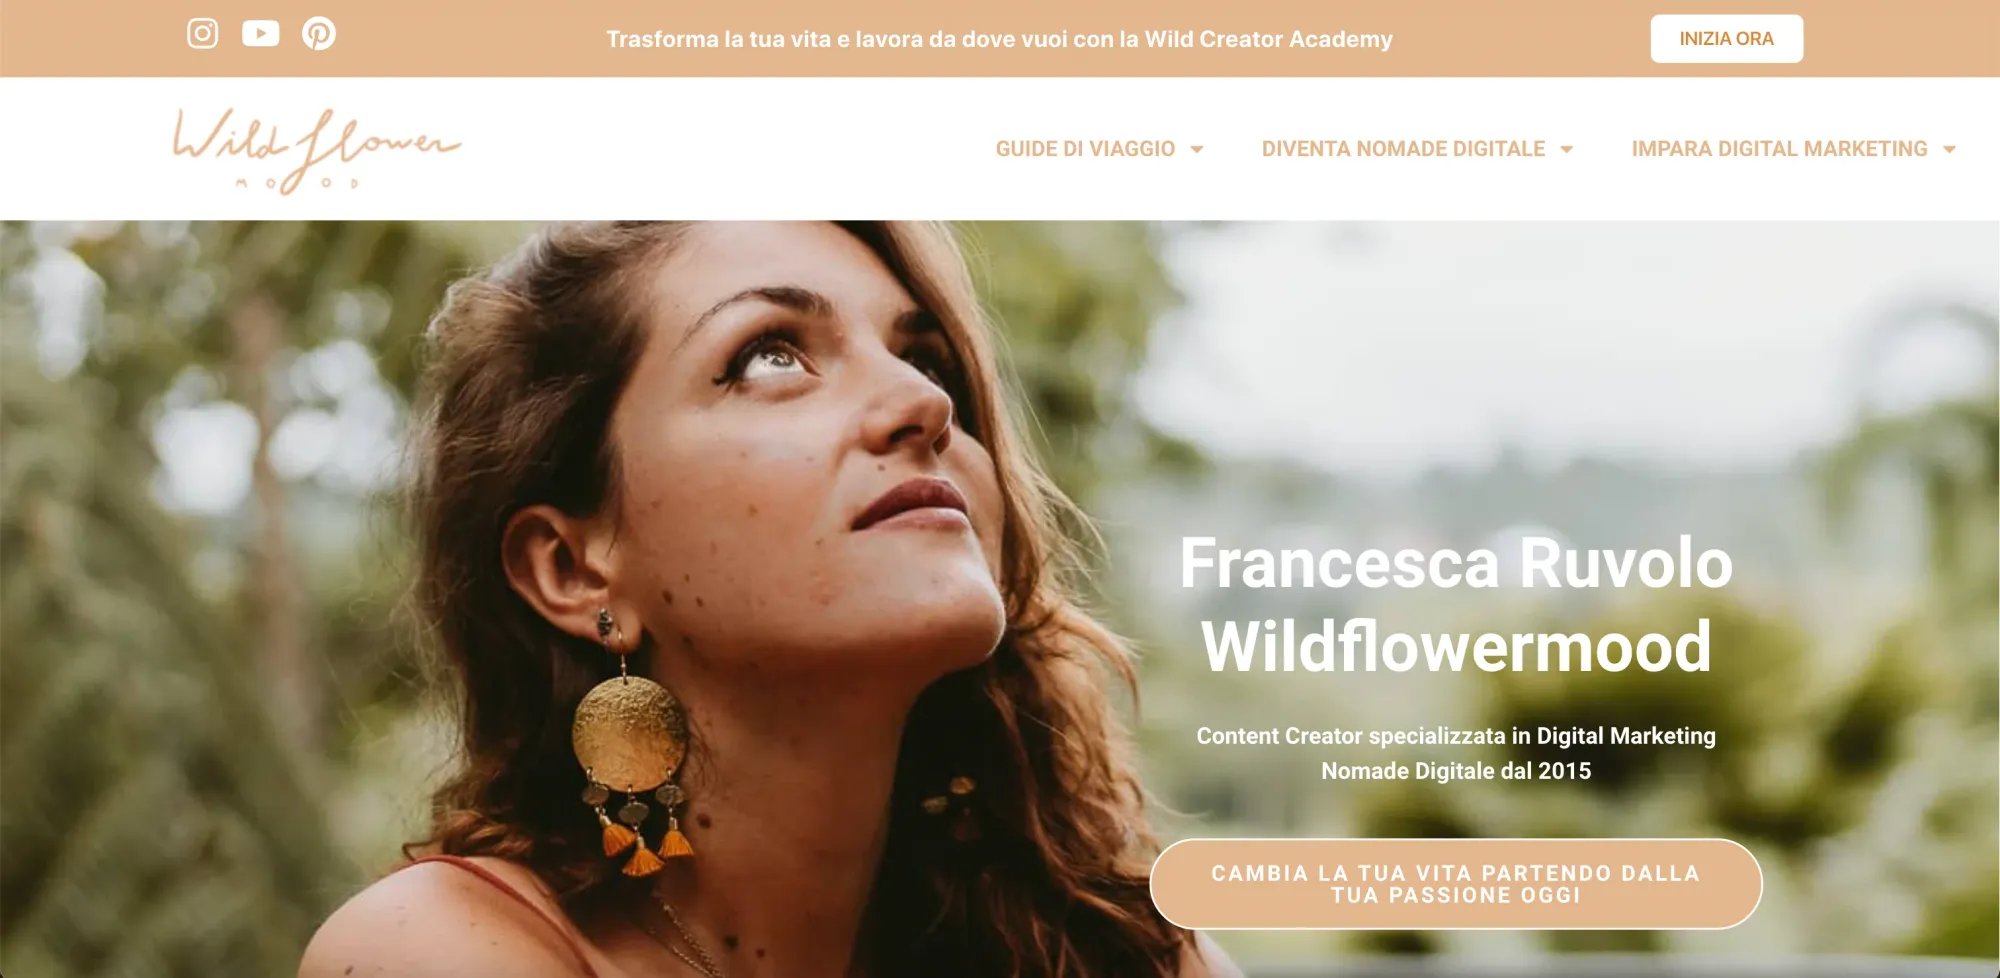 wildflowermood, un blog di Francesca Ruvolo, una nomade digitale italiana